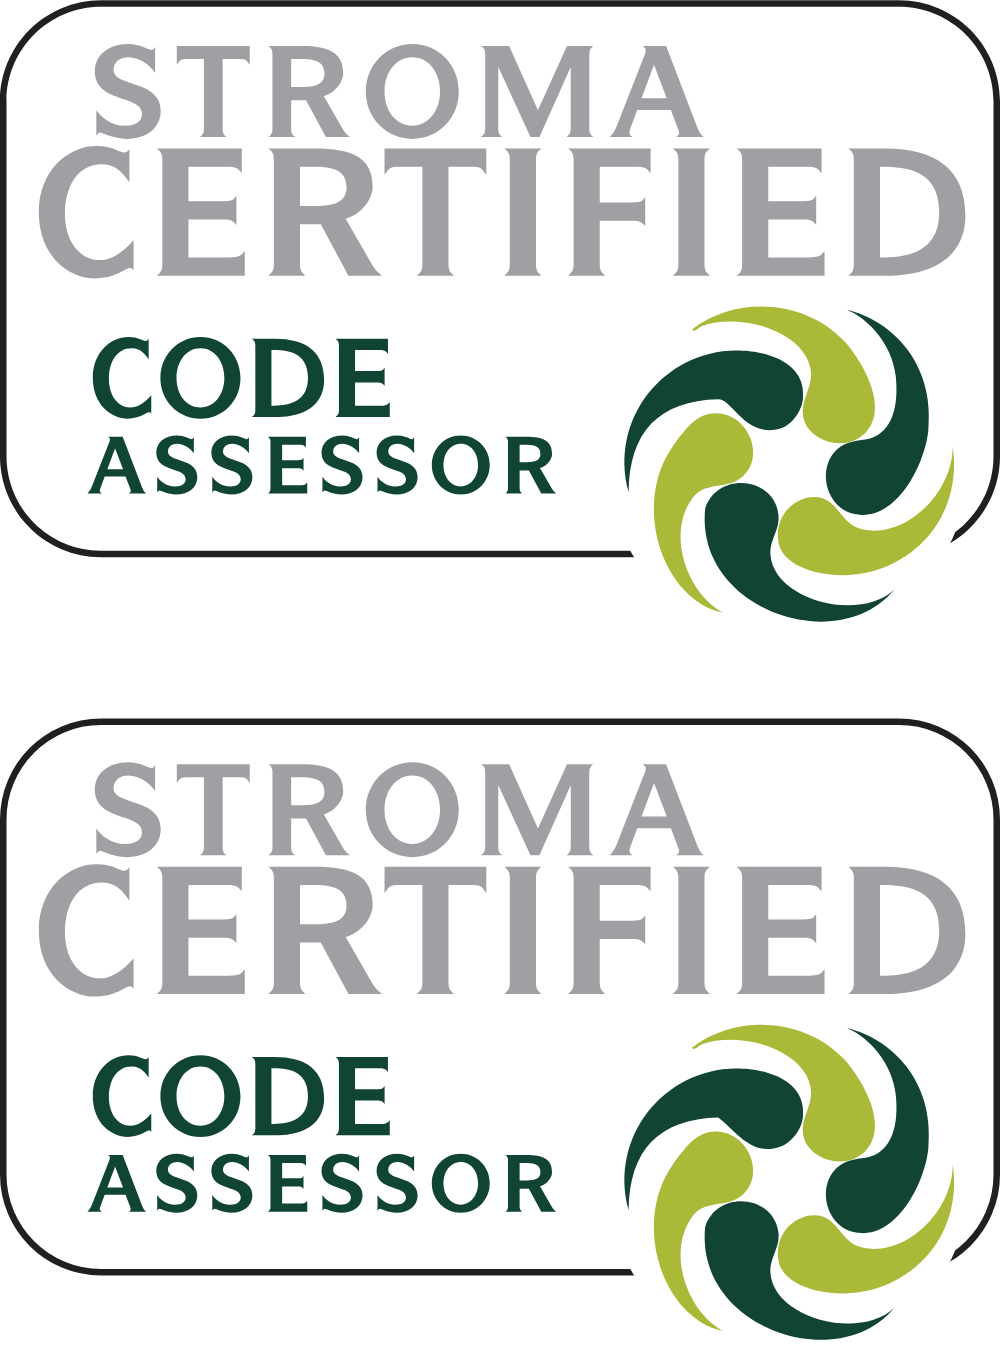 STROMA certified Code Assessor Logo Logos